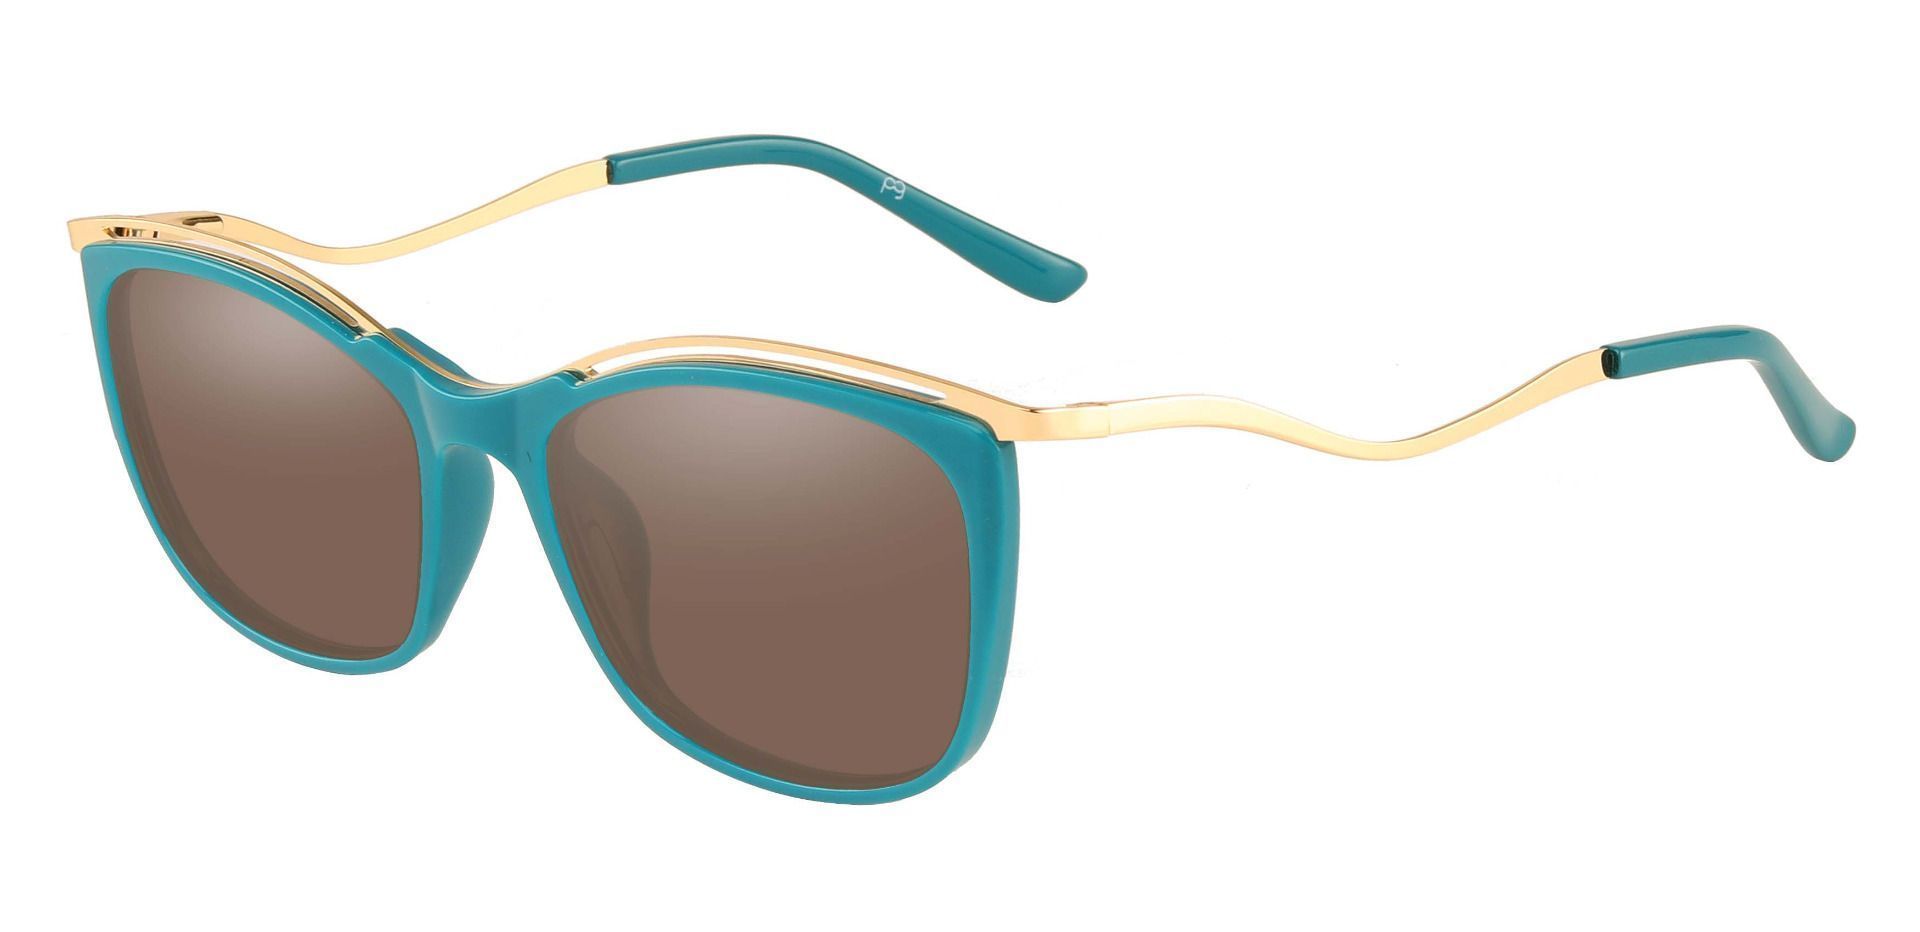 Enola Cat Eye Progressive Sunglasses - Green Frame With Brown Lenses